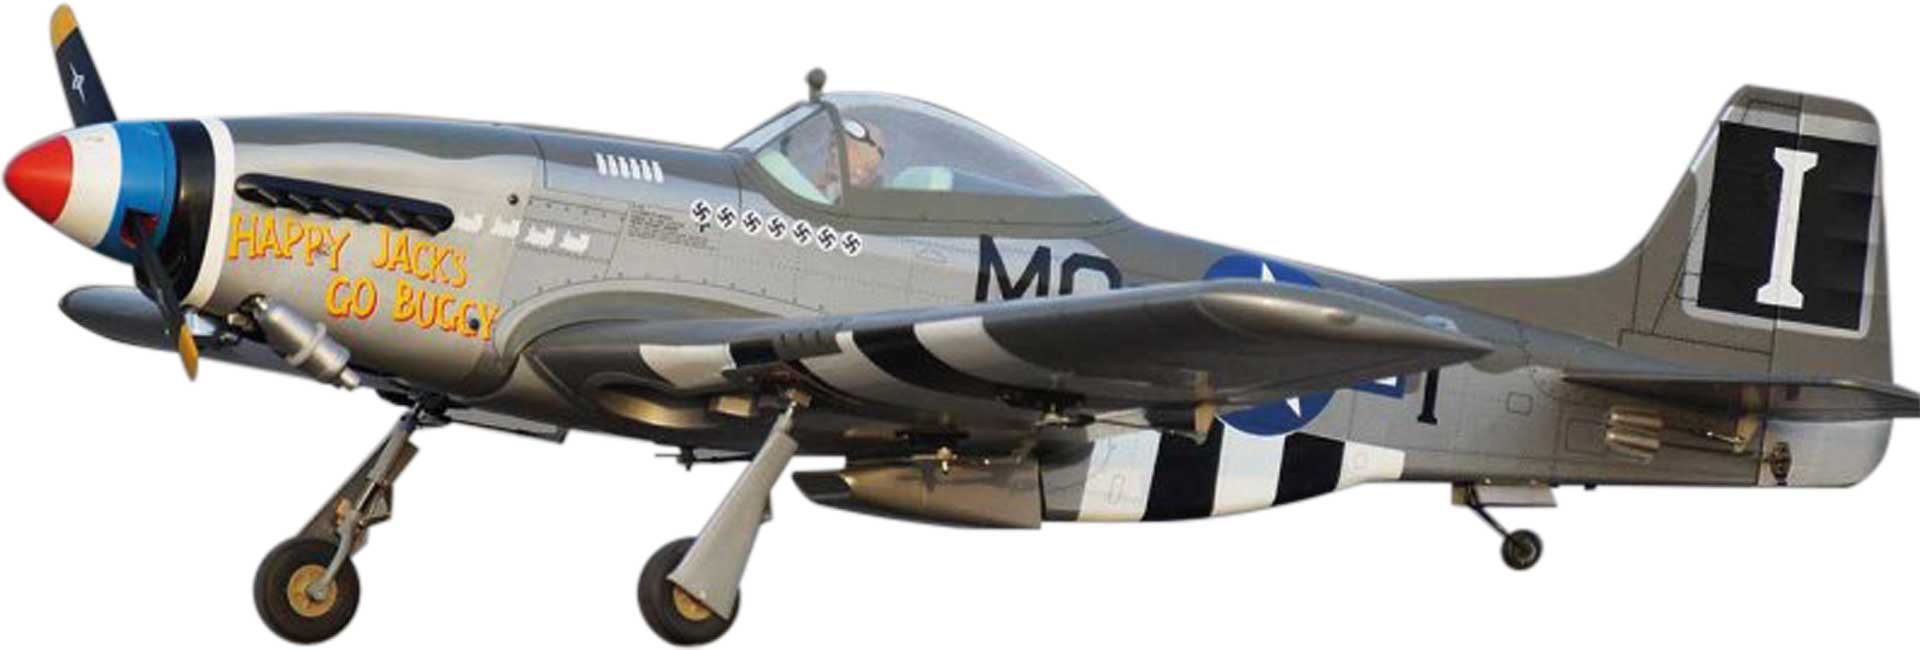 VQ Models P-51D Mustang (Happy Jack's) / 1580mm ARF Warbird